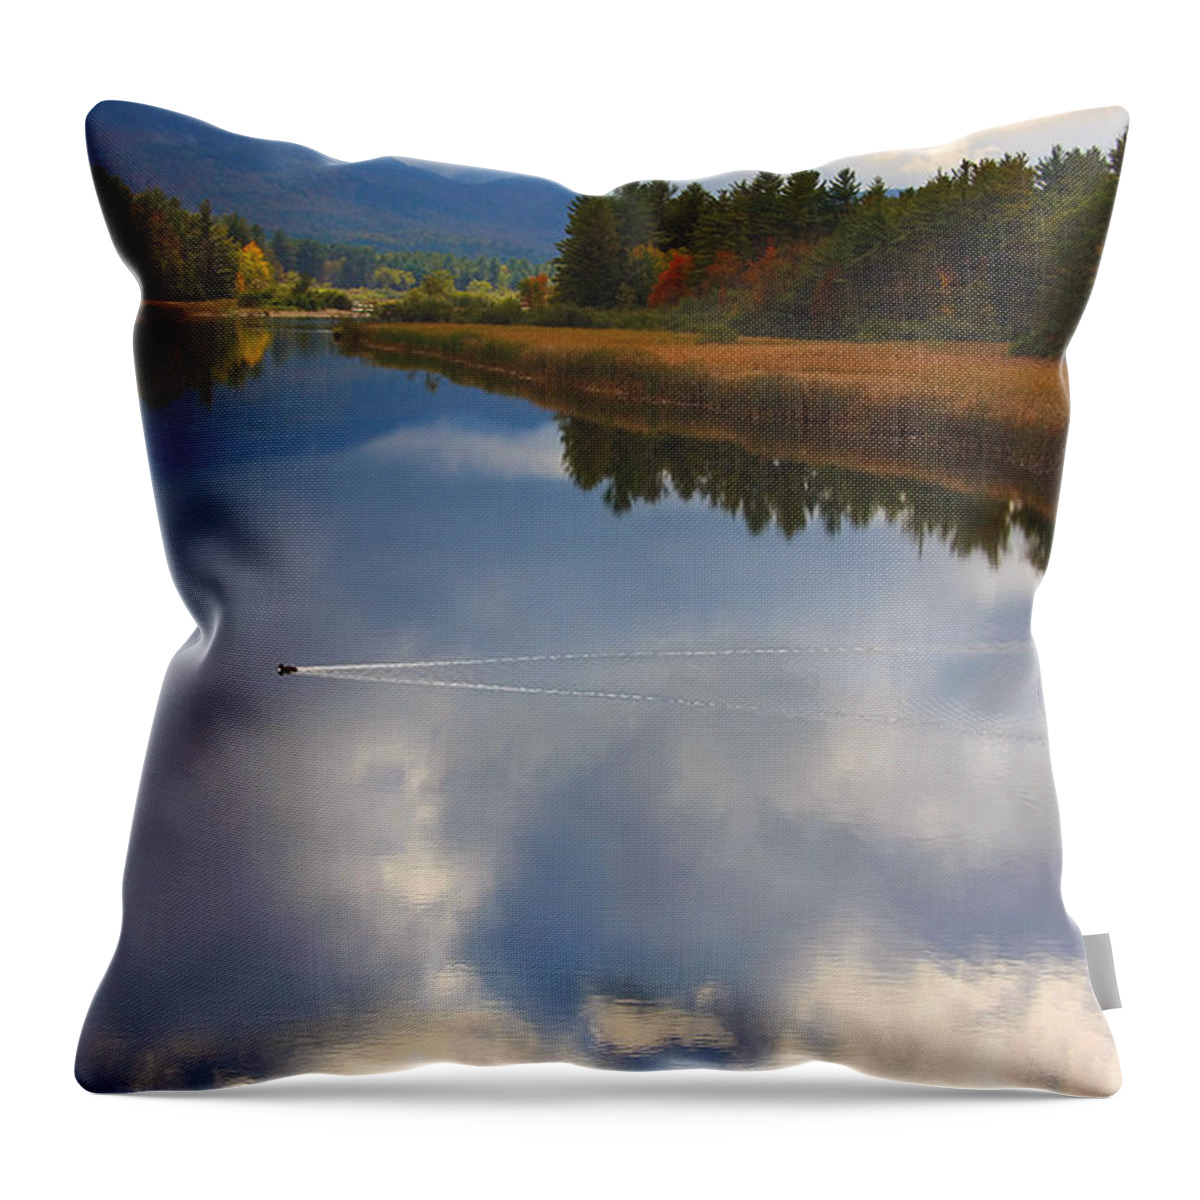 Mallard Duck Throw Pillow featuring the photograph Mallard Duck on Lake in Adirondack Mountains in Autumn by Jerry Cowart